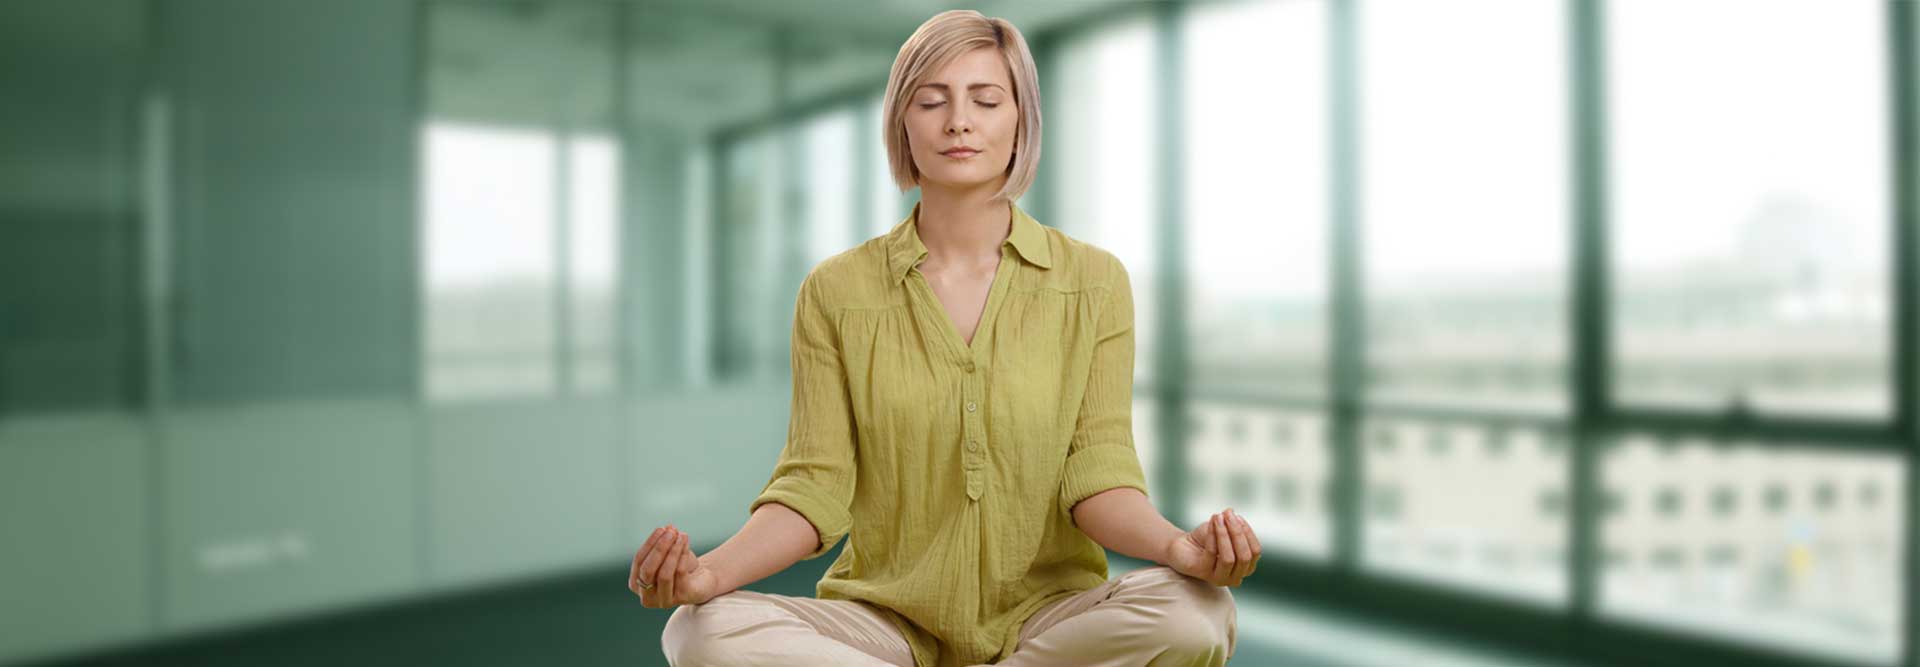 Less stress Using Self Healing Methods – Energy Healing Online Training Course